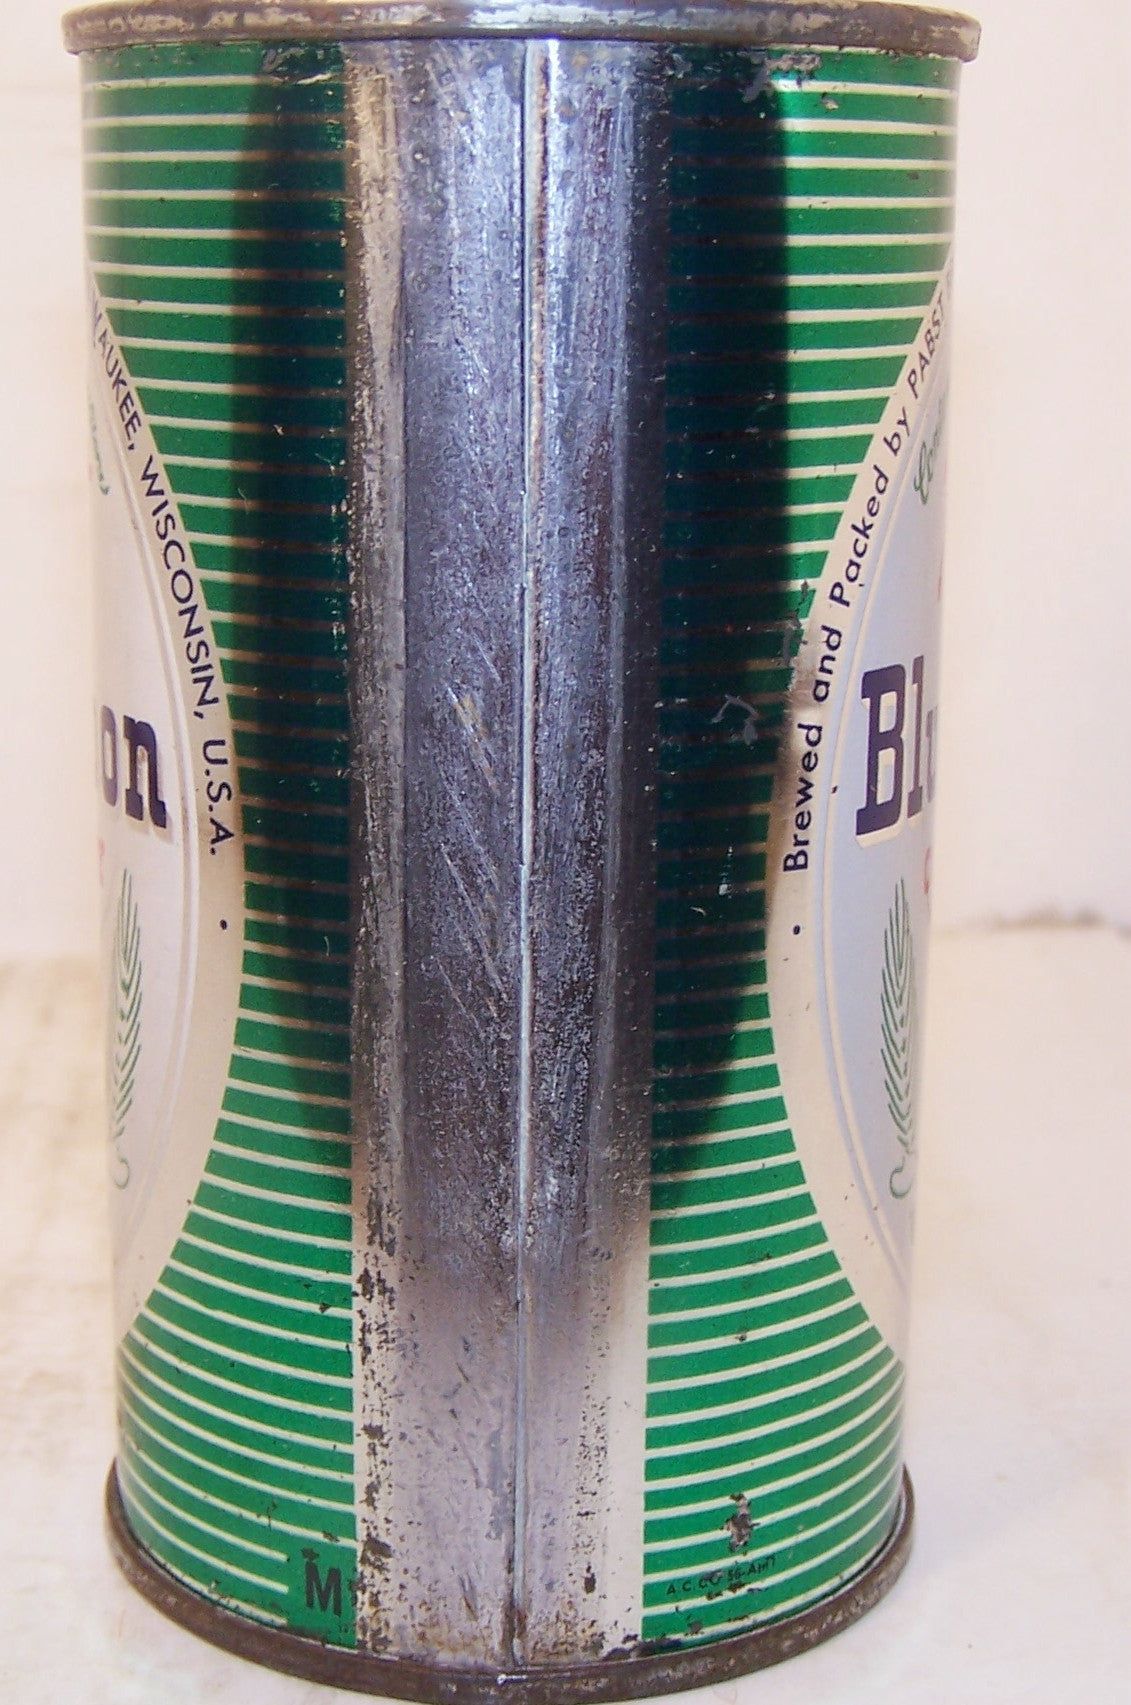 Pabst Blue Ribbon Genuine Dry Ale, USBC 111-2 Grade 1 Sold 12/2/14